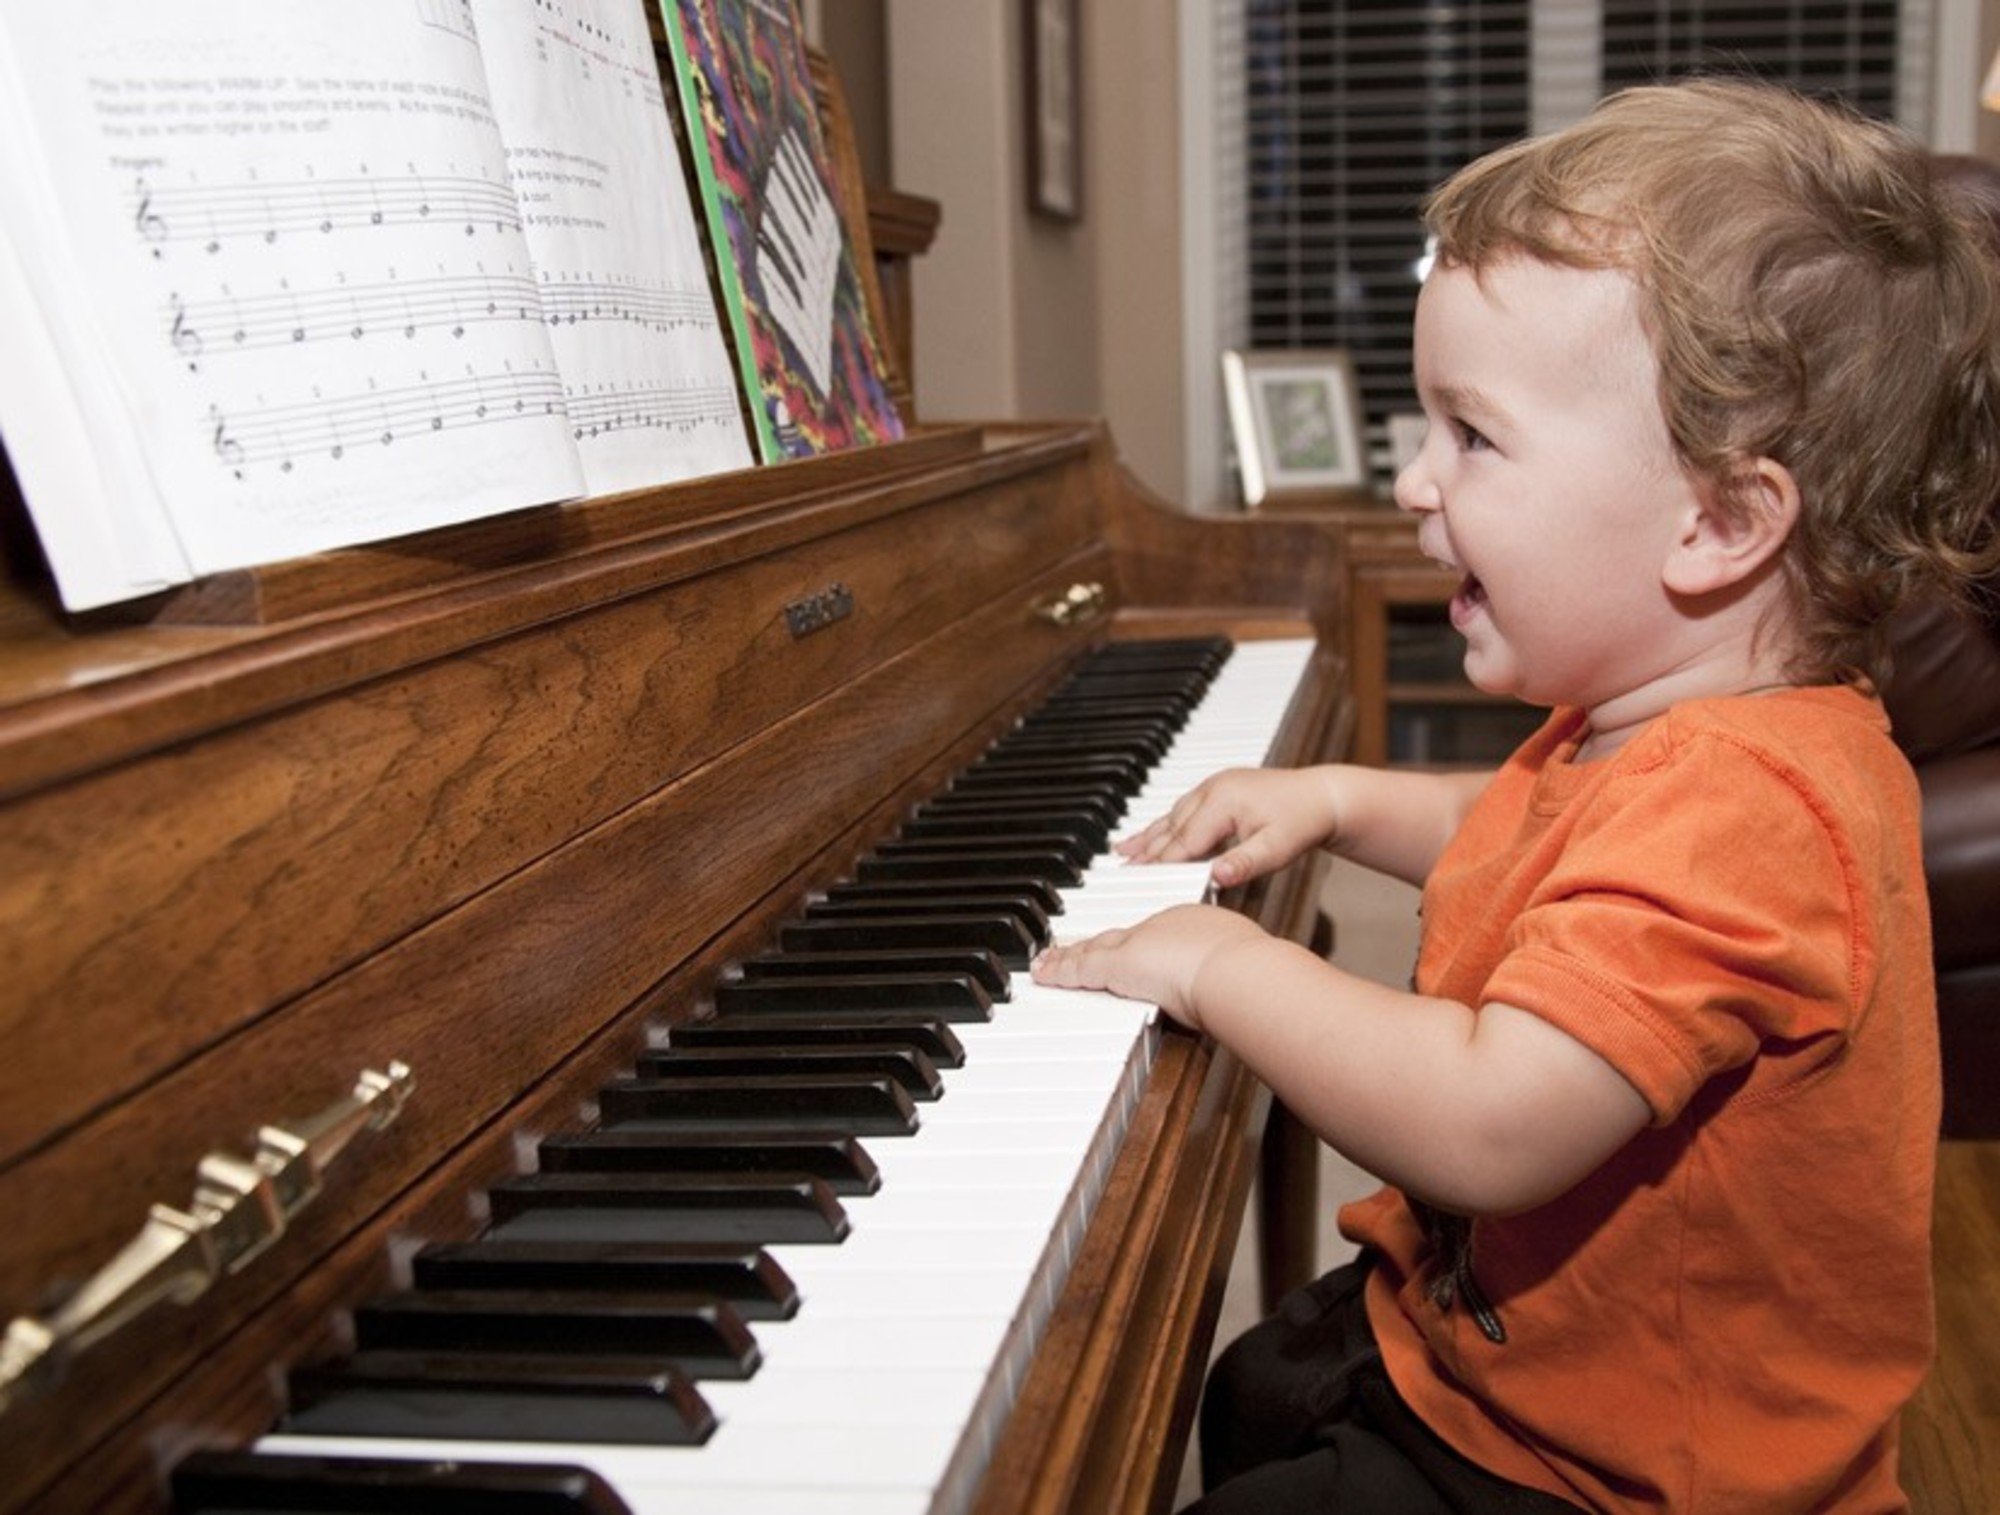 He can the piano. Фортепиано для детей. Пианино для детей. Музыкальные инструменты для детей. Пианино в детском саду.